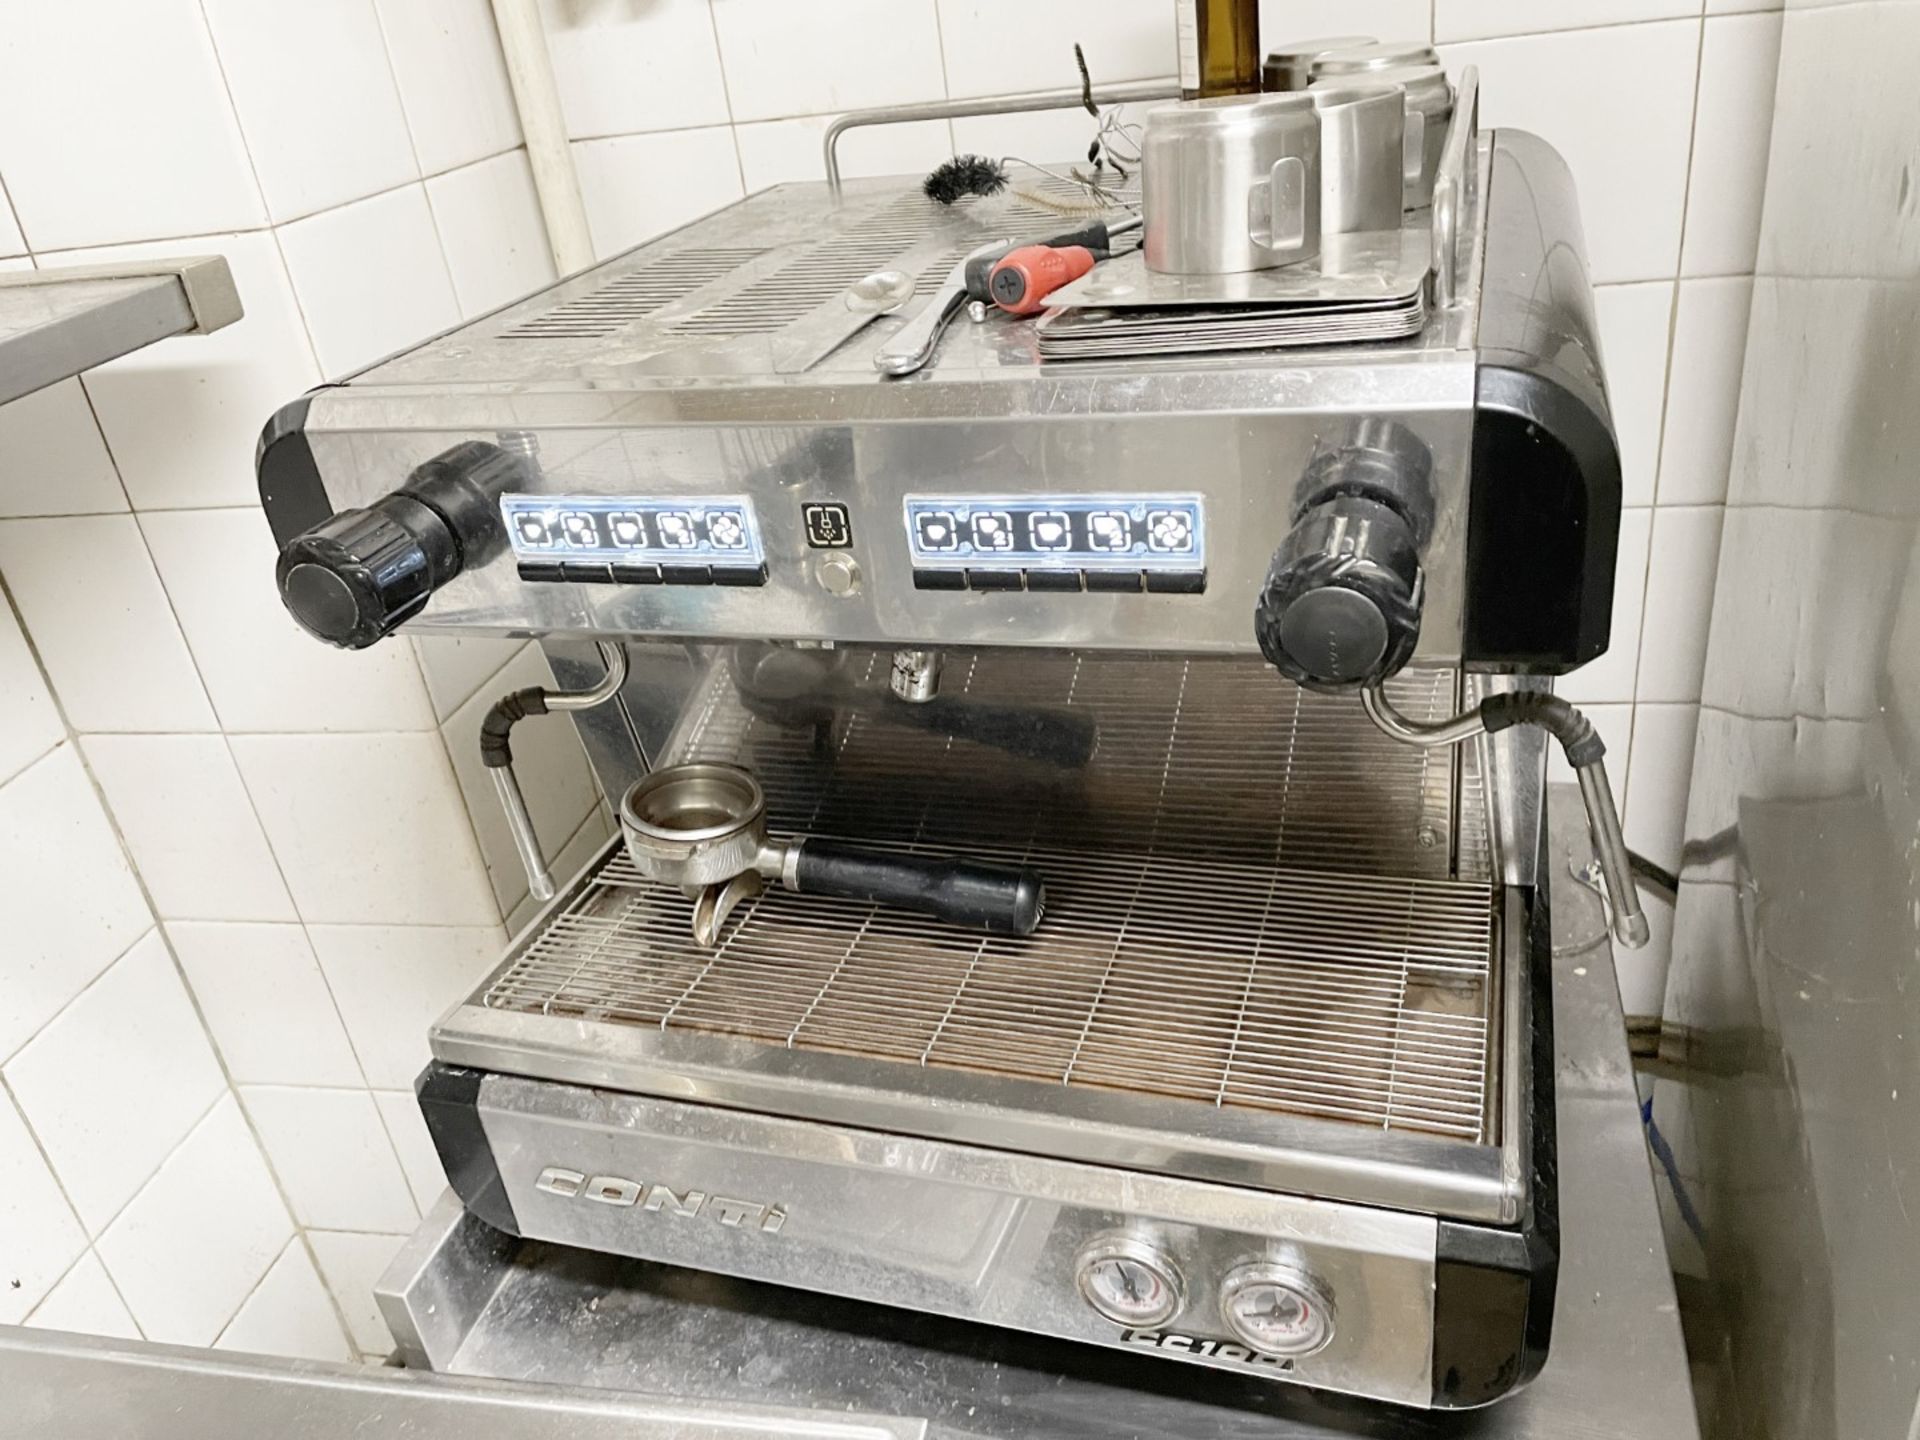 1 x CONTI CC100 2-Group Traditional Espresso Coffee Machine, 230v - CL909 - Location: London, W1U